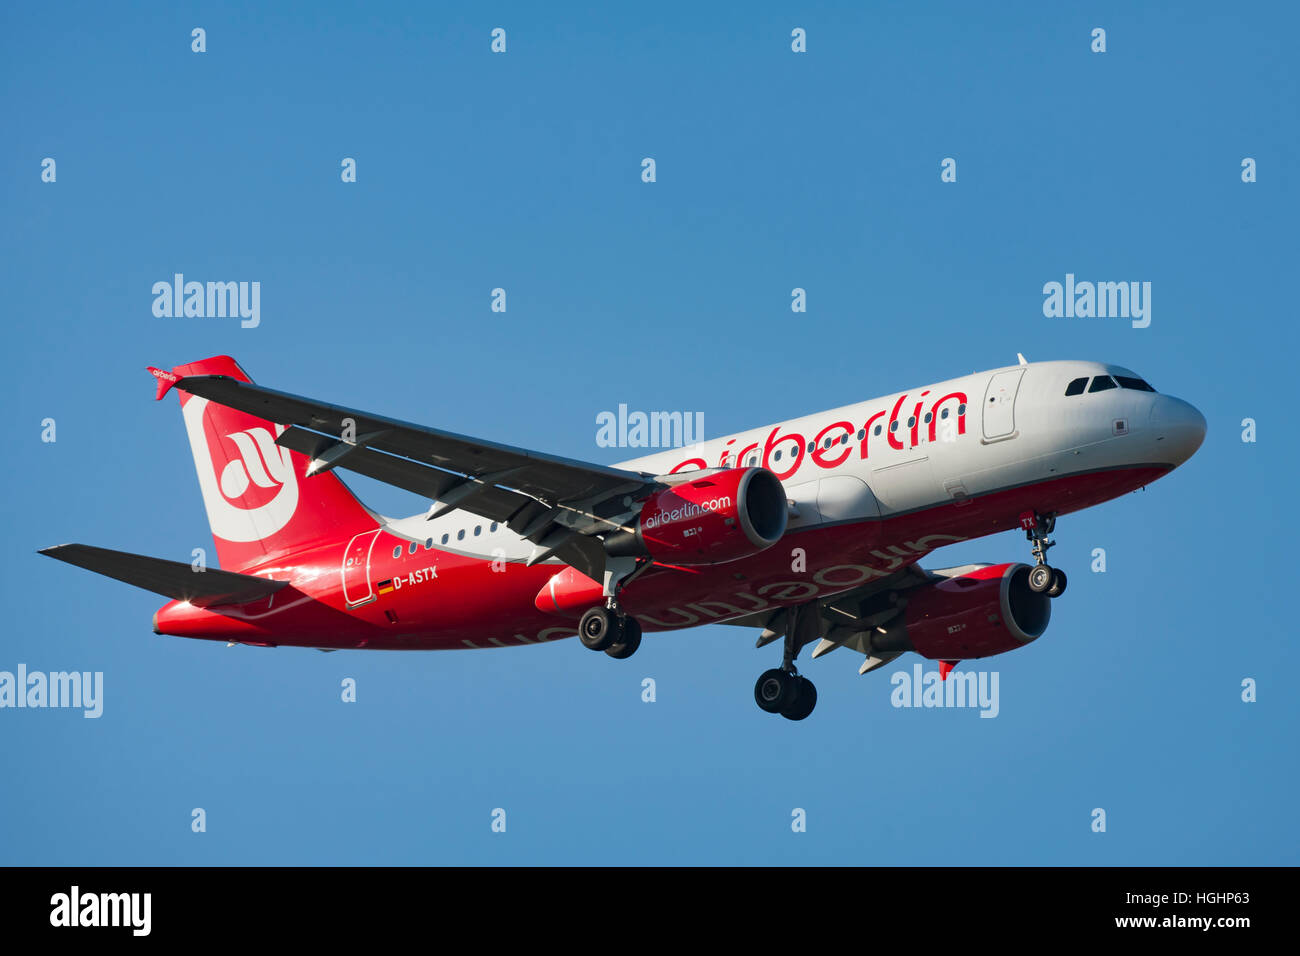 AirBerlin-Verkehrsflugzeug, die Landung in Kopenhagen Stockfoto